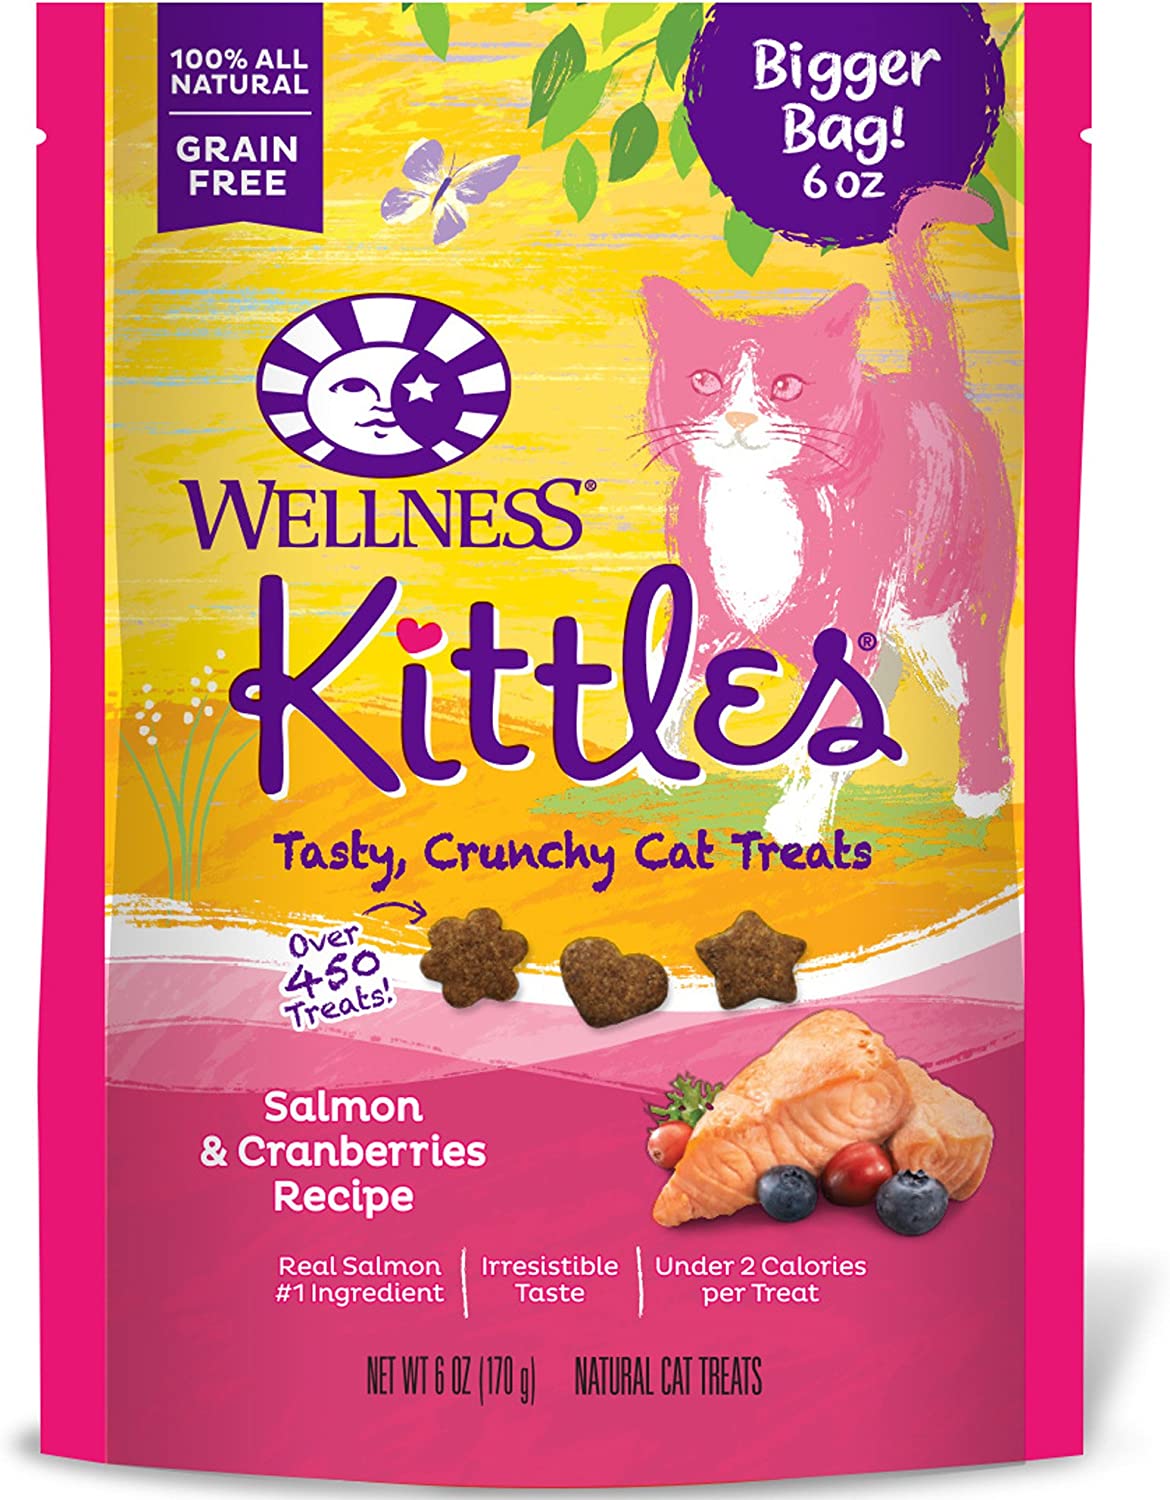 6-Oz Wellness Kittles Grain-Free Crunchy Cat Treats (Salmon or Tuna) $3.10 w/ S&S + Free Shipping w/ Prime or on $25+